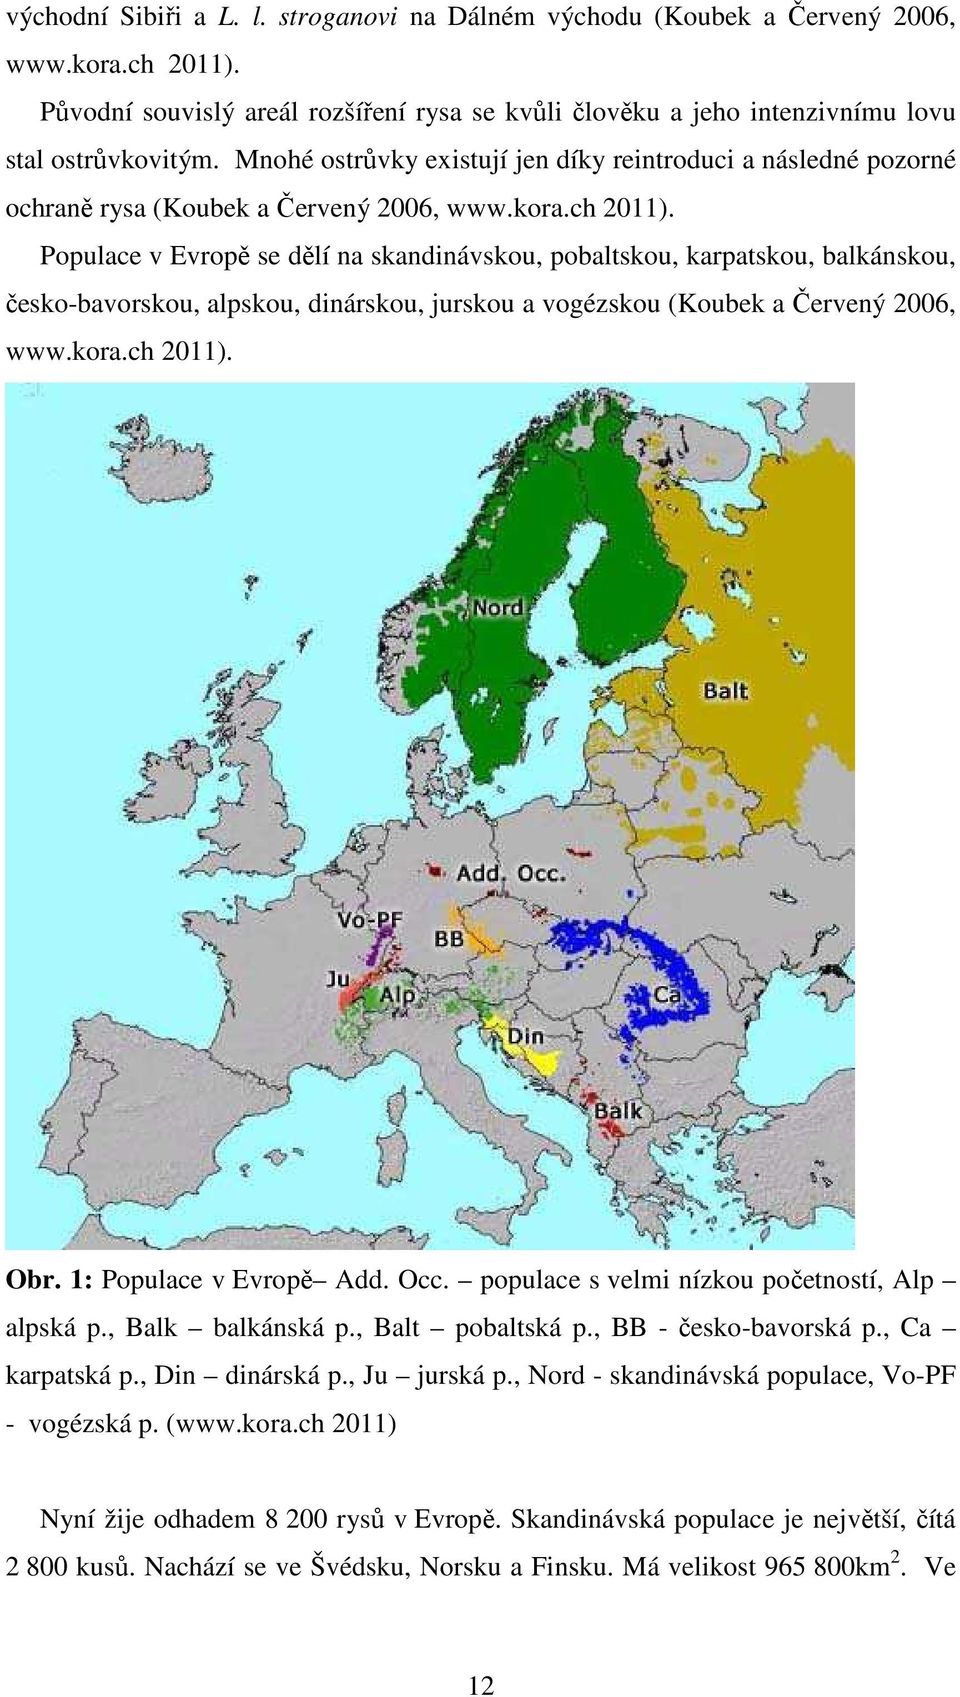 Populace v Evropě se dělí na skandinávskou, pobaltskou, karpatskou, balkánskou, česko-bavorskou, alpskou, dinárskou, jurskou a vogézskou (Koubek a Červený 2006, www.kora.ch 2011). Obr.